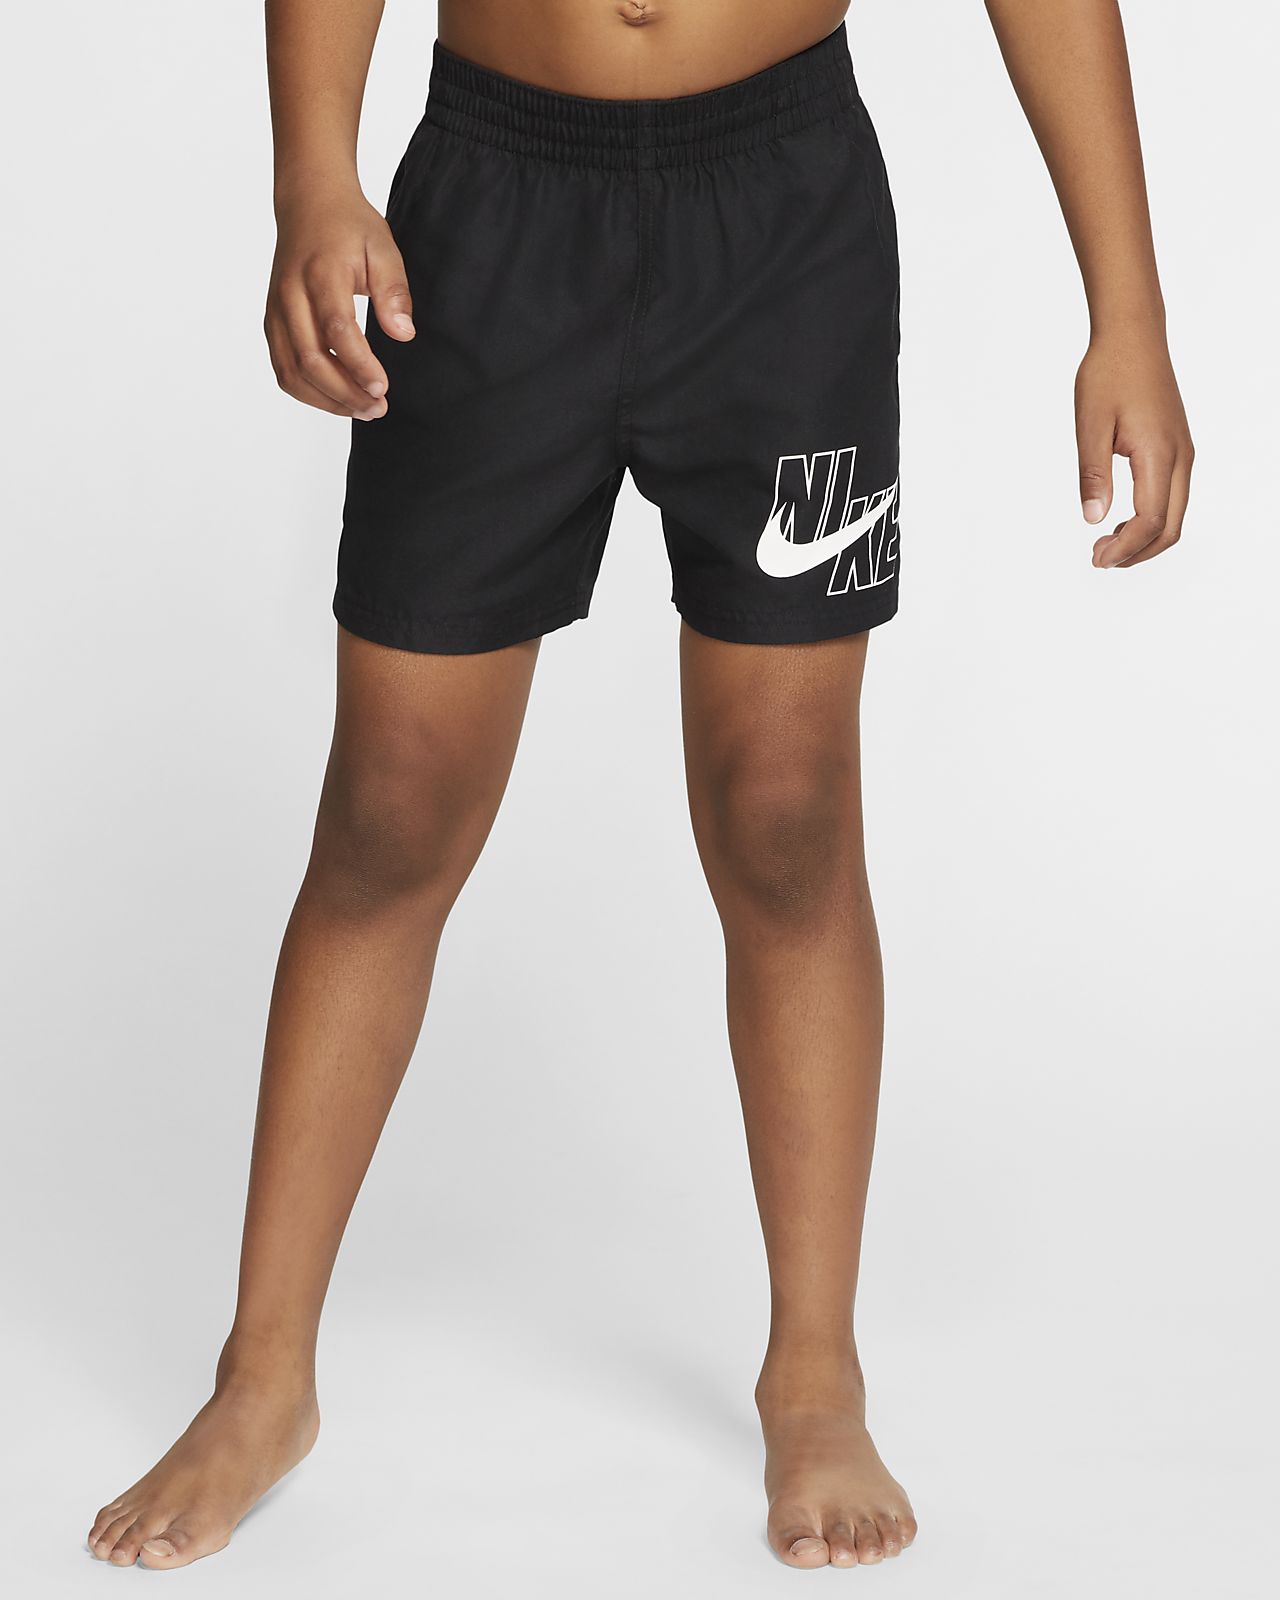 Nike Swimwear Boy Shorts Online, SAVE - mpgc.net